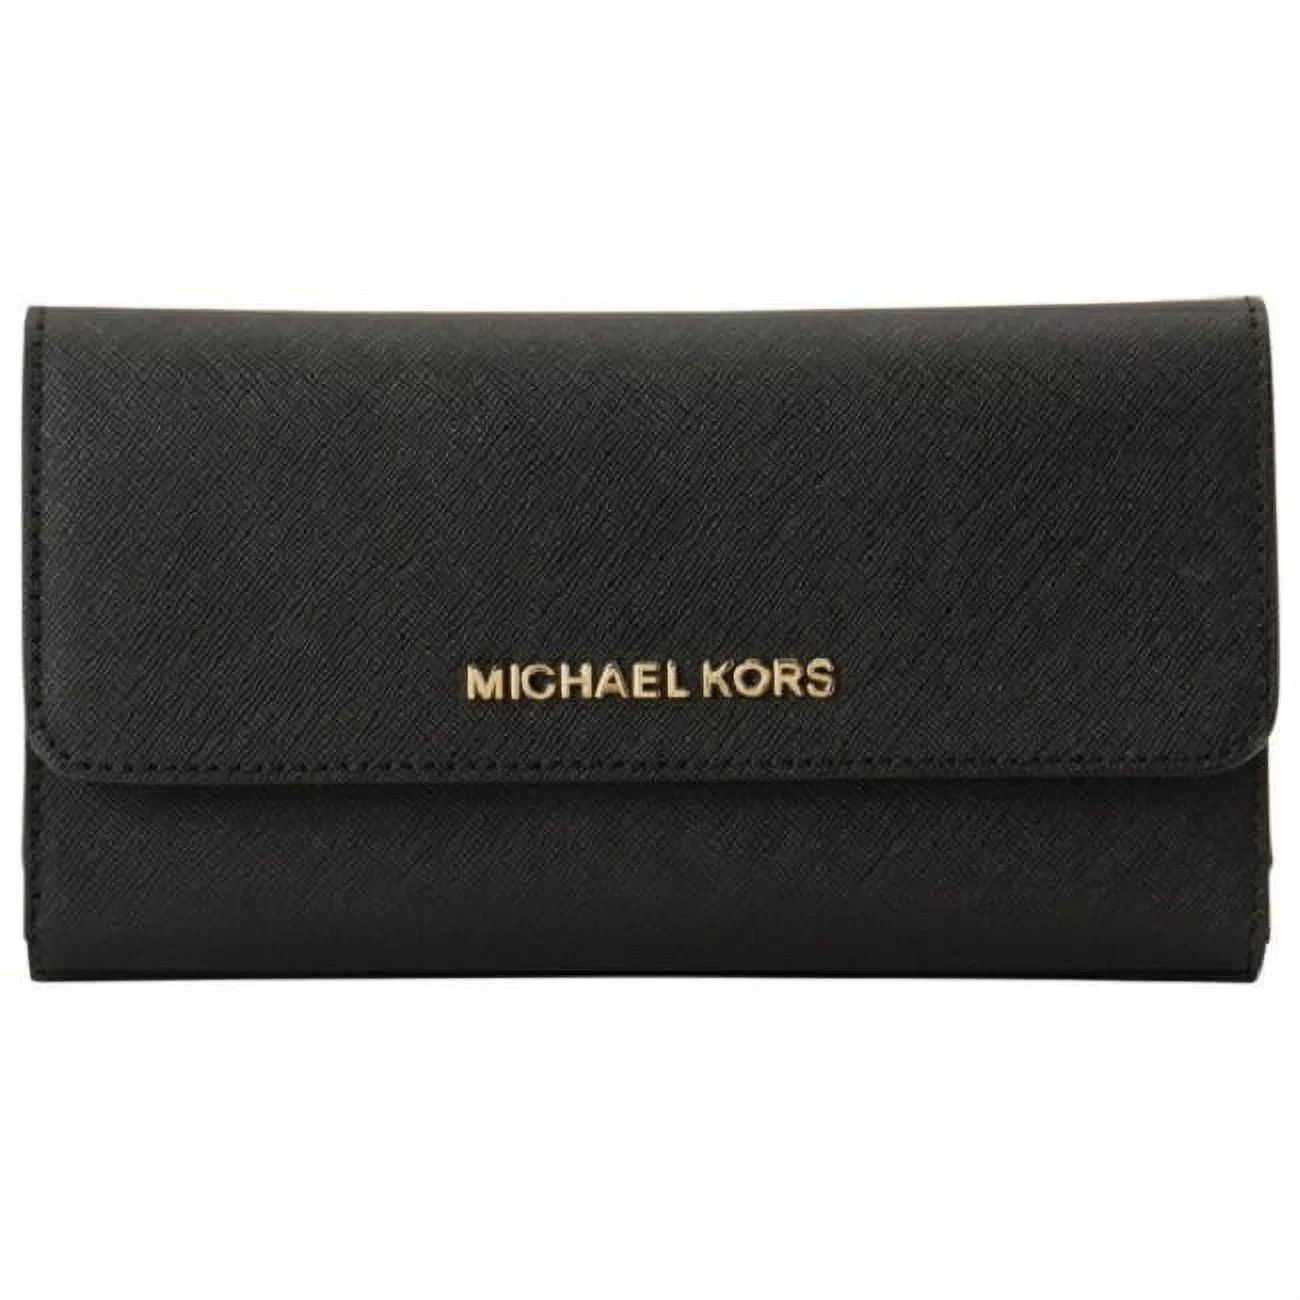 Michael Kors Jet Set Travel Large Trifold Leather Wallet, Black | Walmart (US)